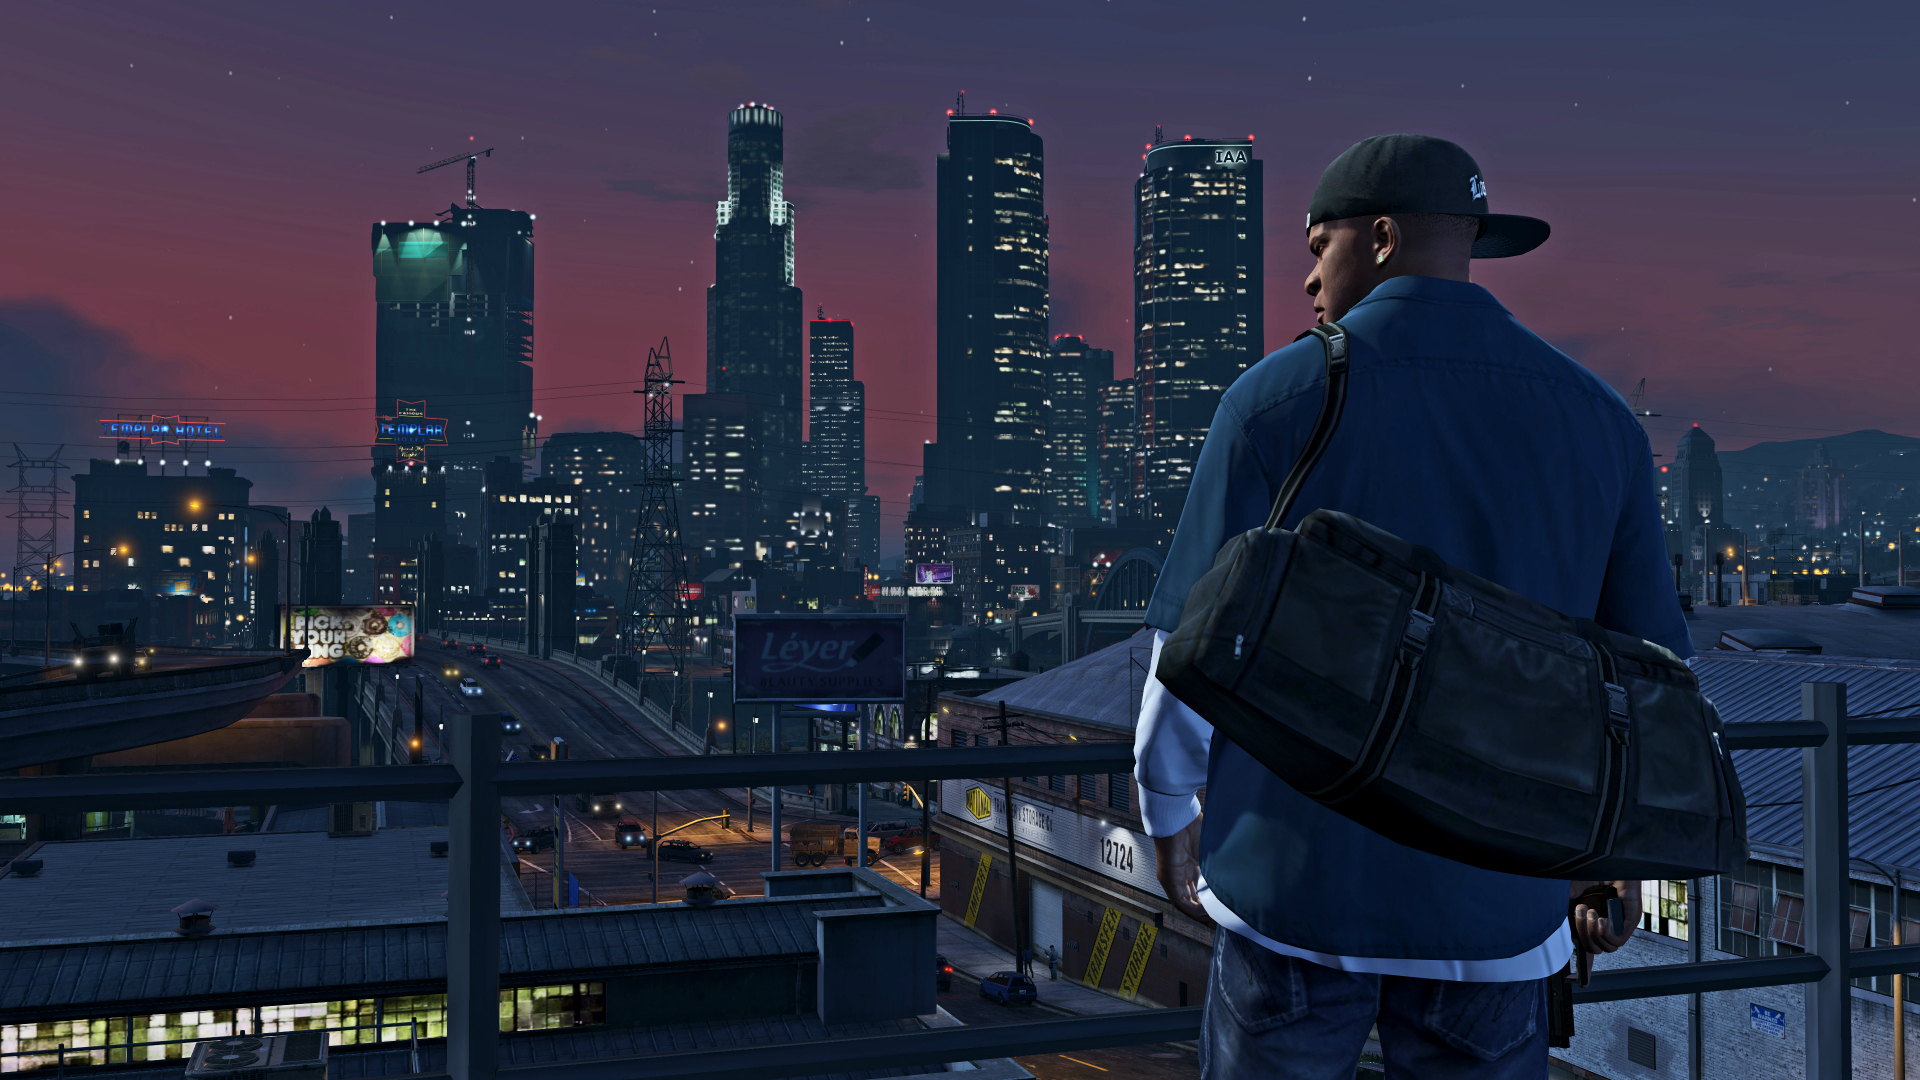 Franklin looks over Los Santos at night